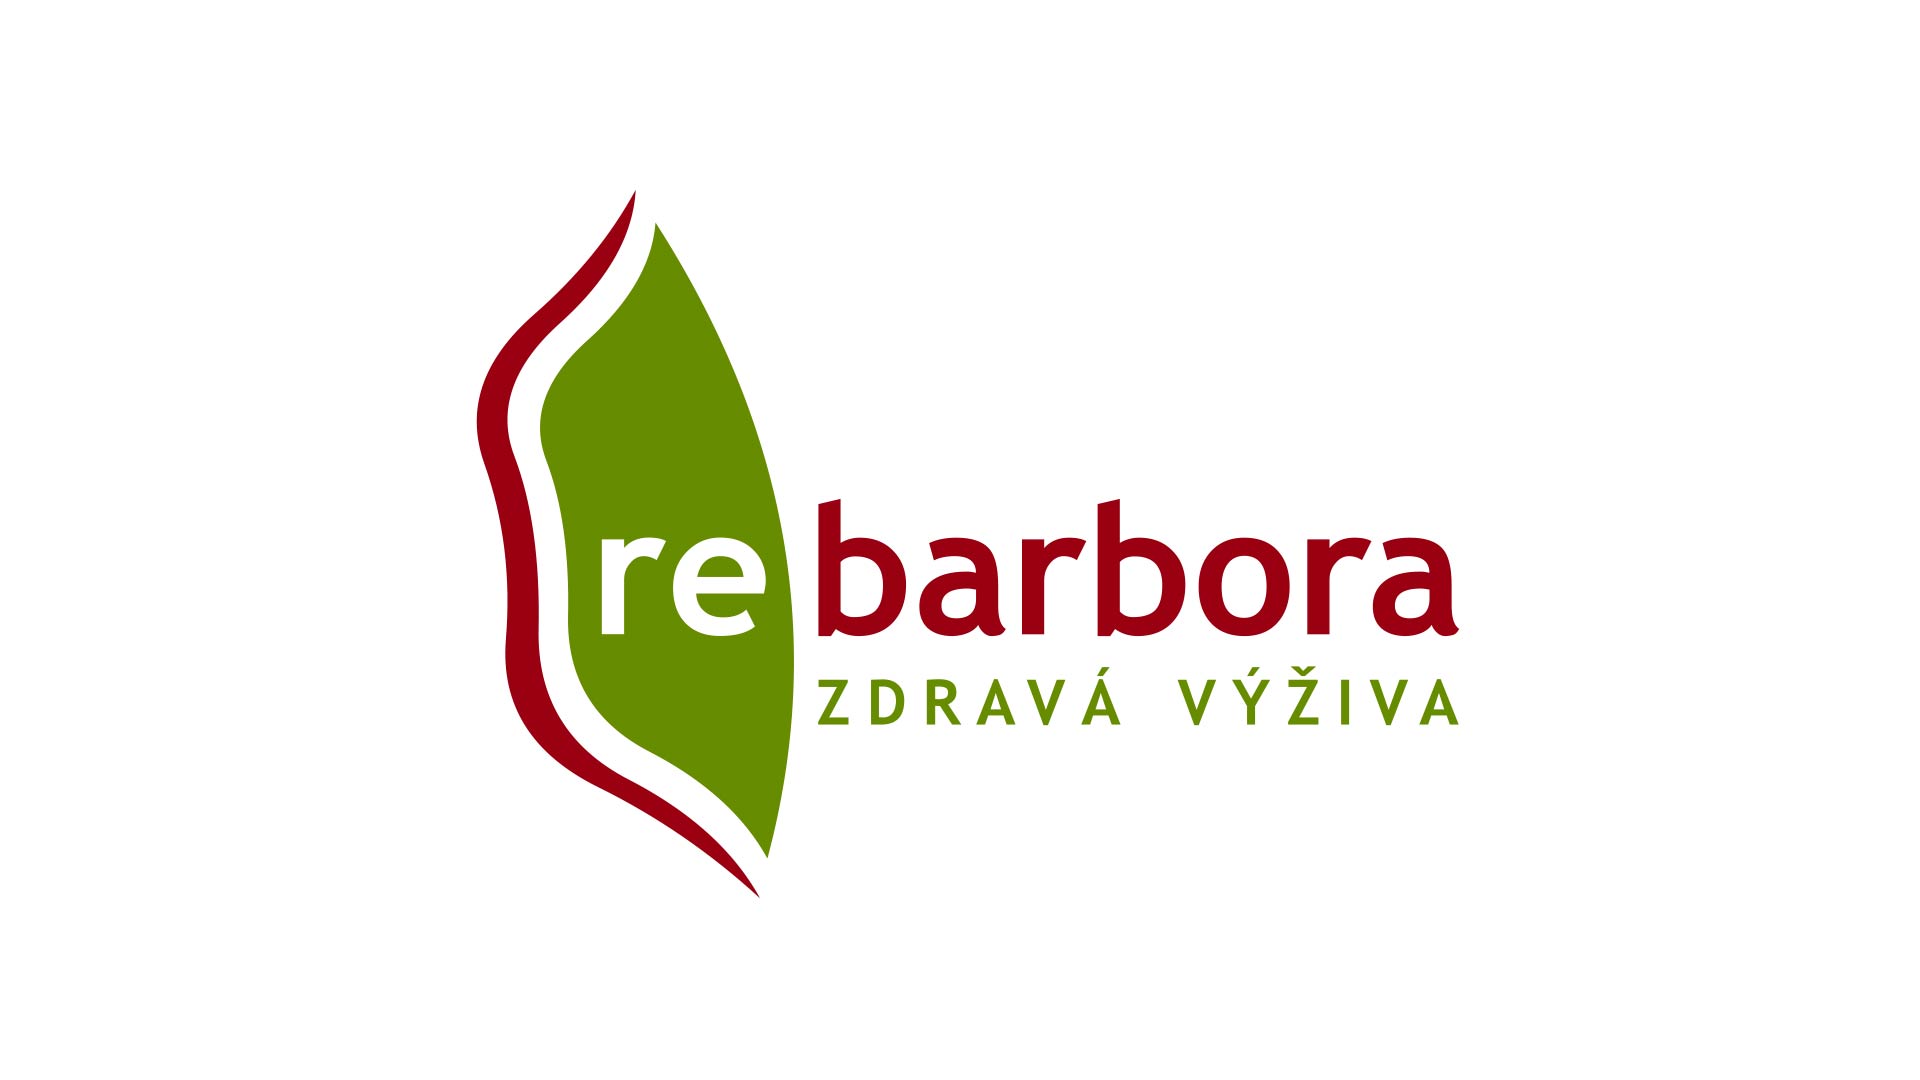 Tvorba loga - logo Zdravá výživa Rebarbora